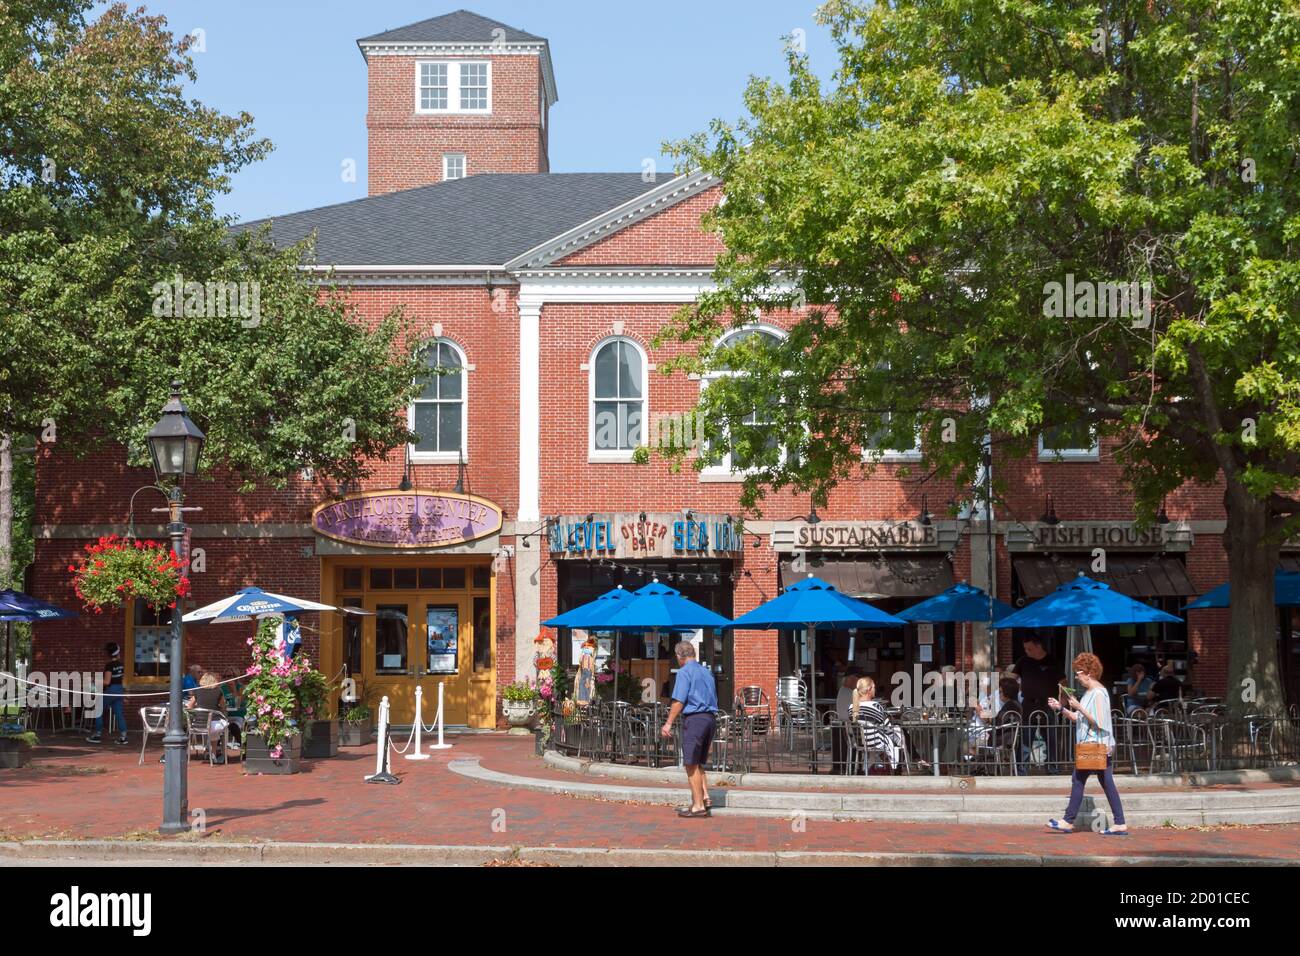 Sea Level Oyster Bar Restaurant im historischen Market Square, Newburyport, Massachusetts, USA Stockfoto